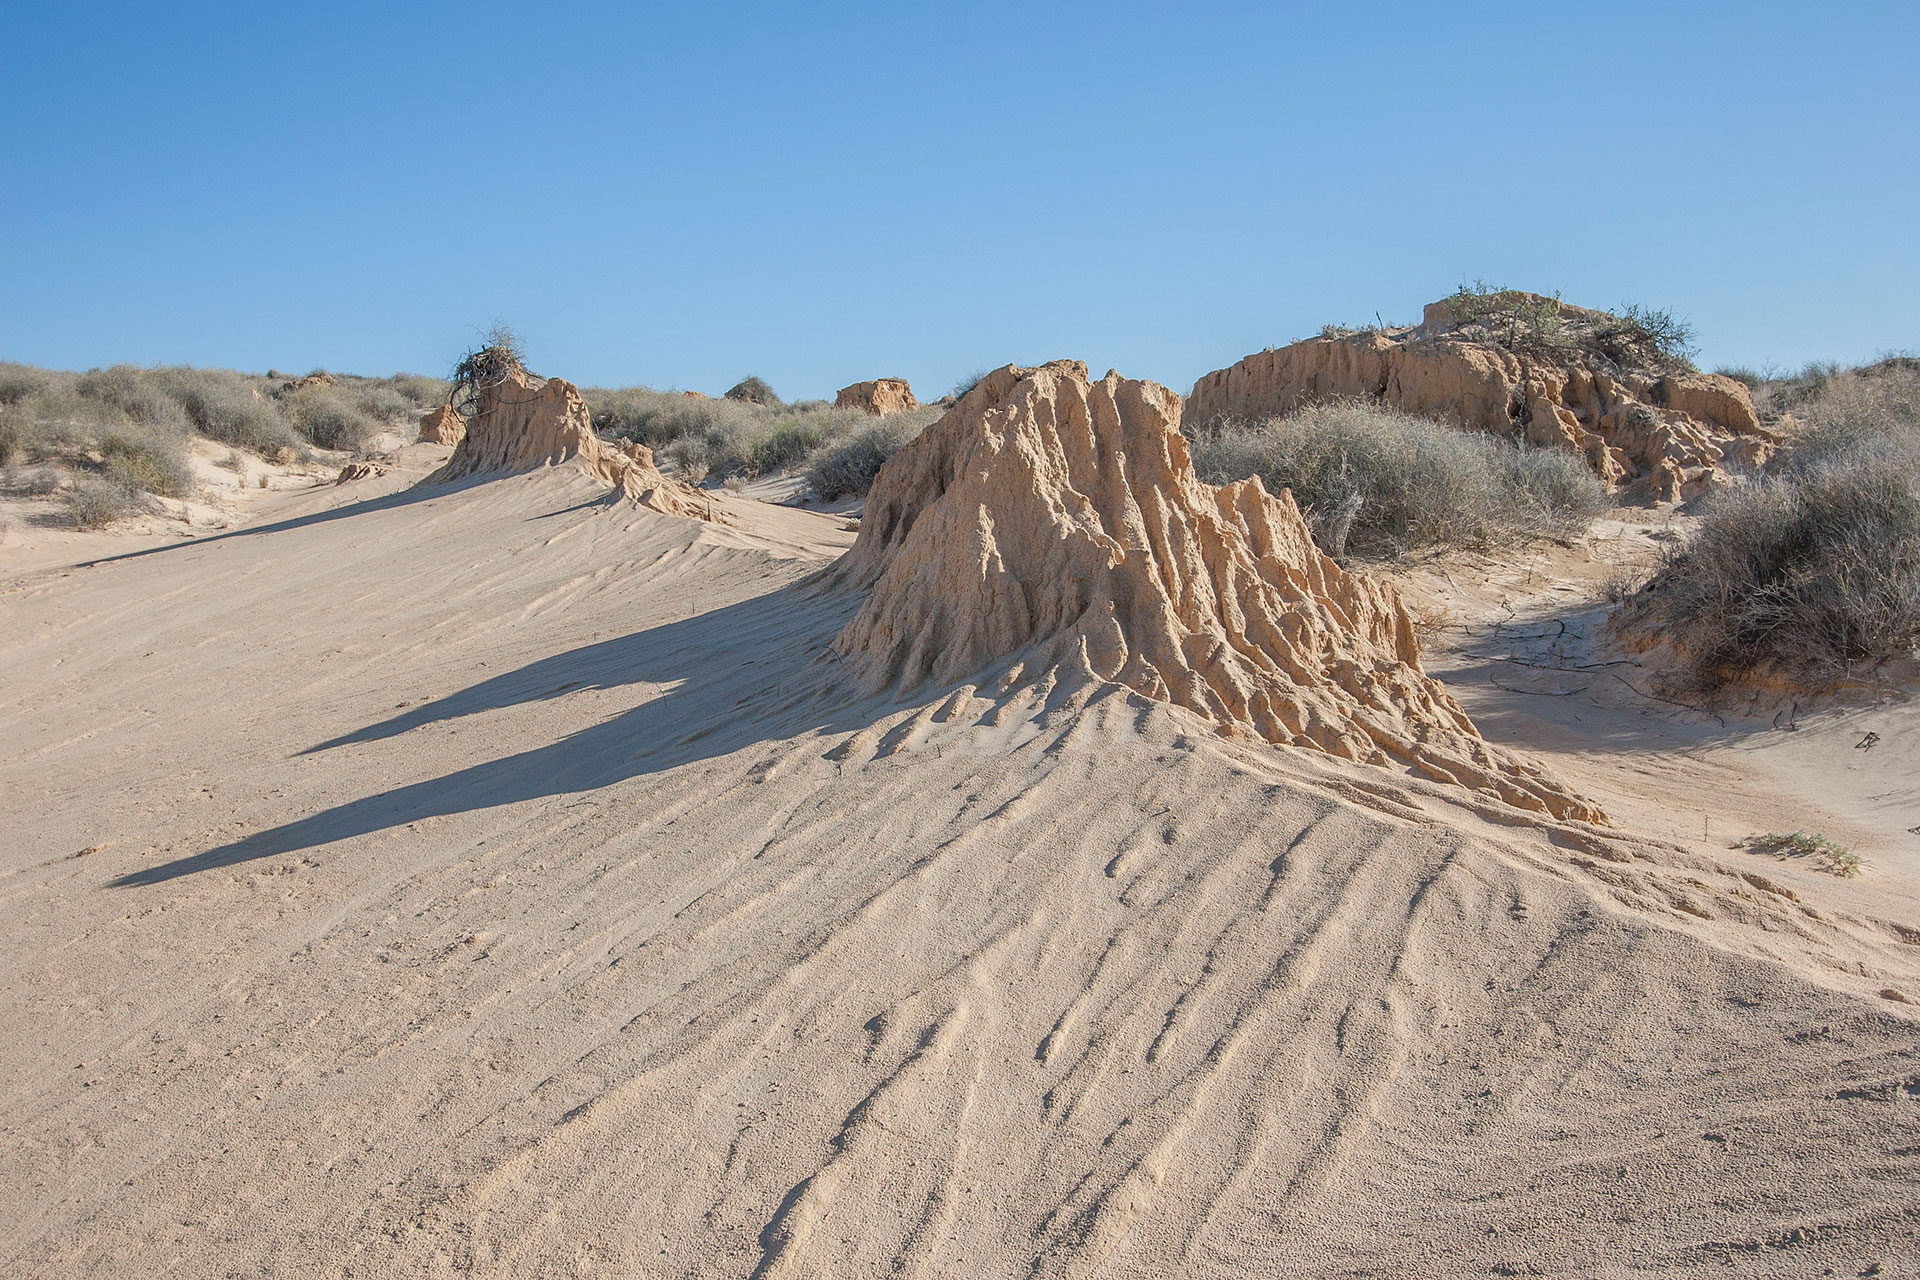 A dune's core.